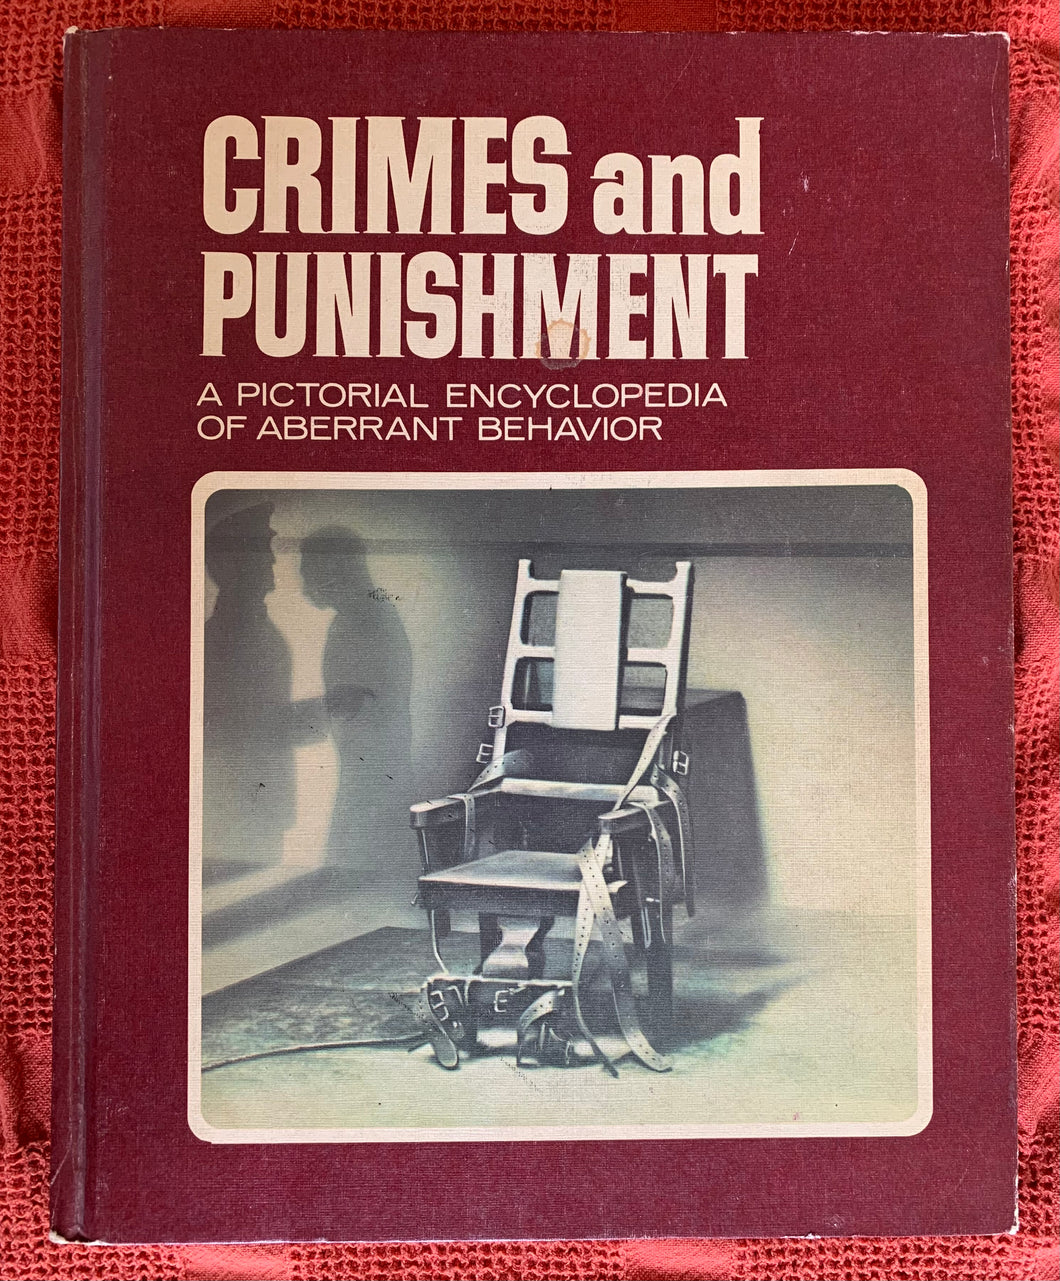 Crimes and Punishment: A Pictorial Encyclopedia of Aberrant Behavior, Vol. 1